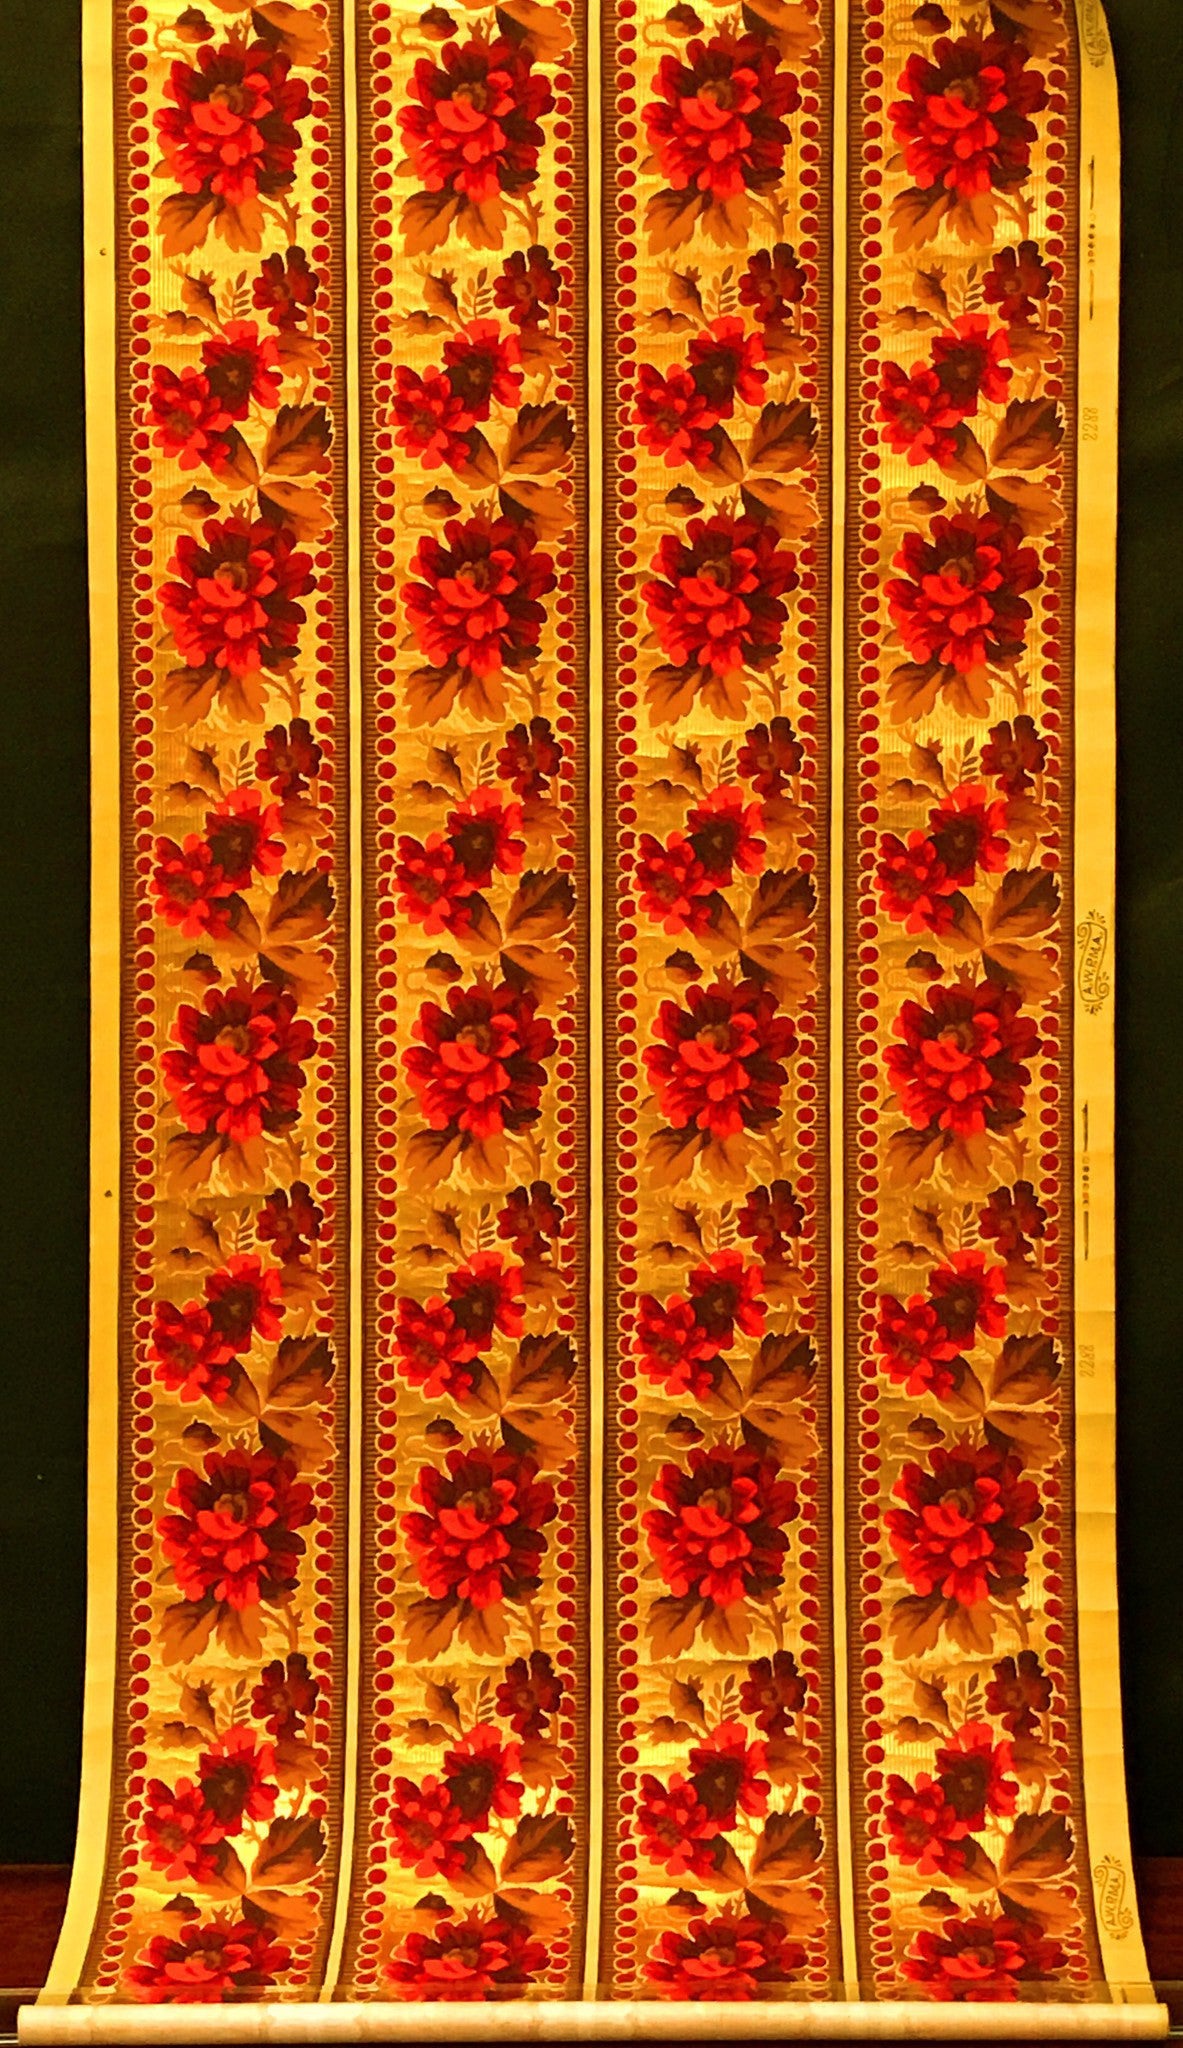 4-Band 4-5/8" Gilt Floral Border - Antique Wallpaper Rolls